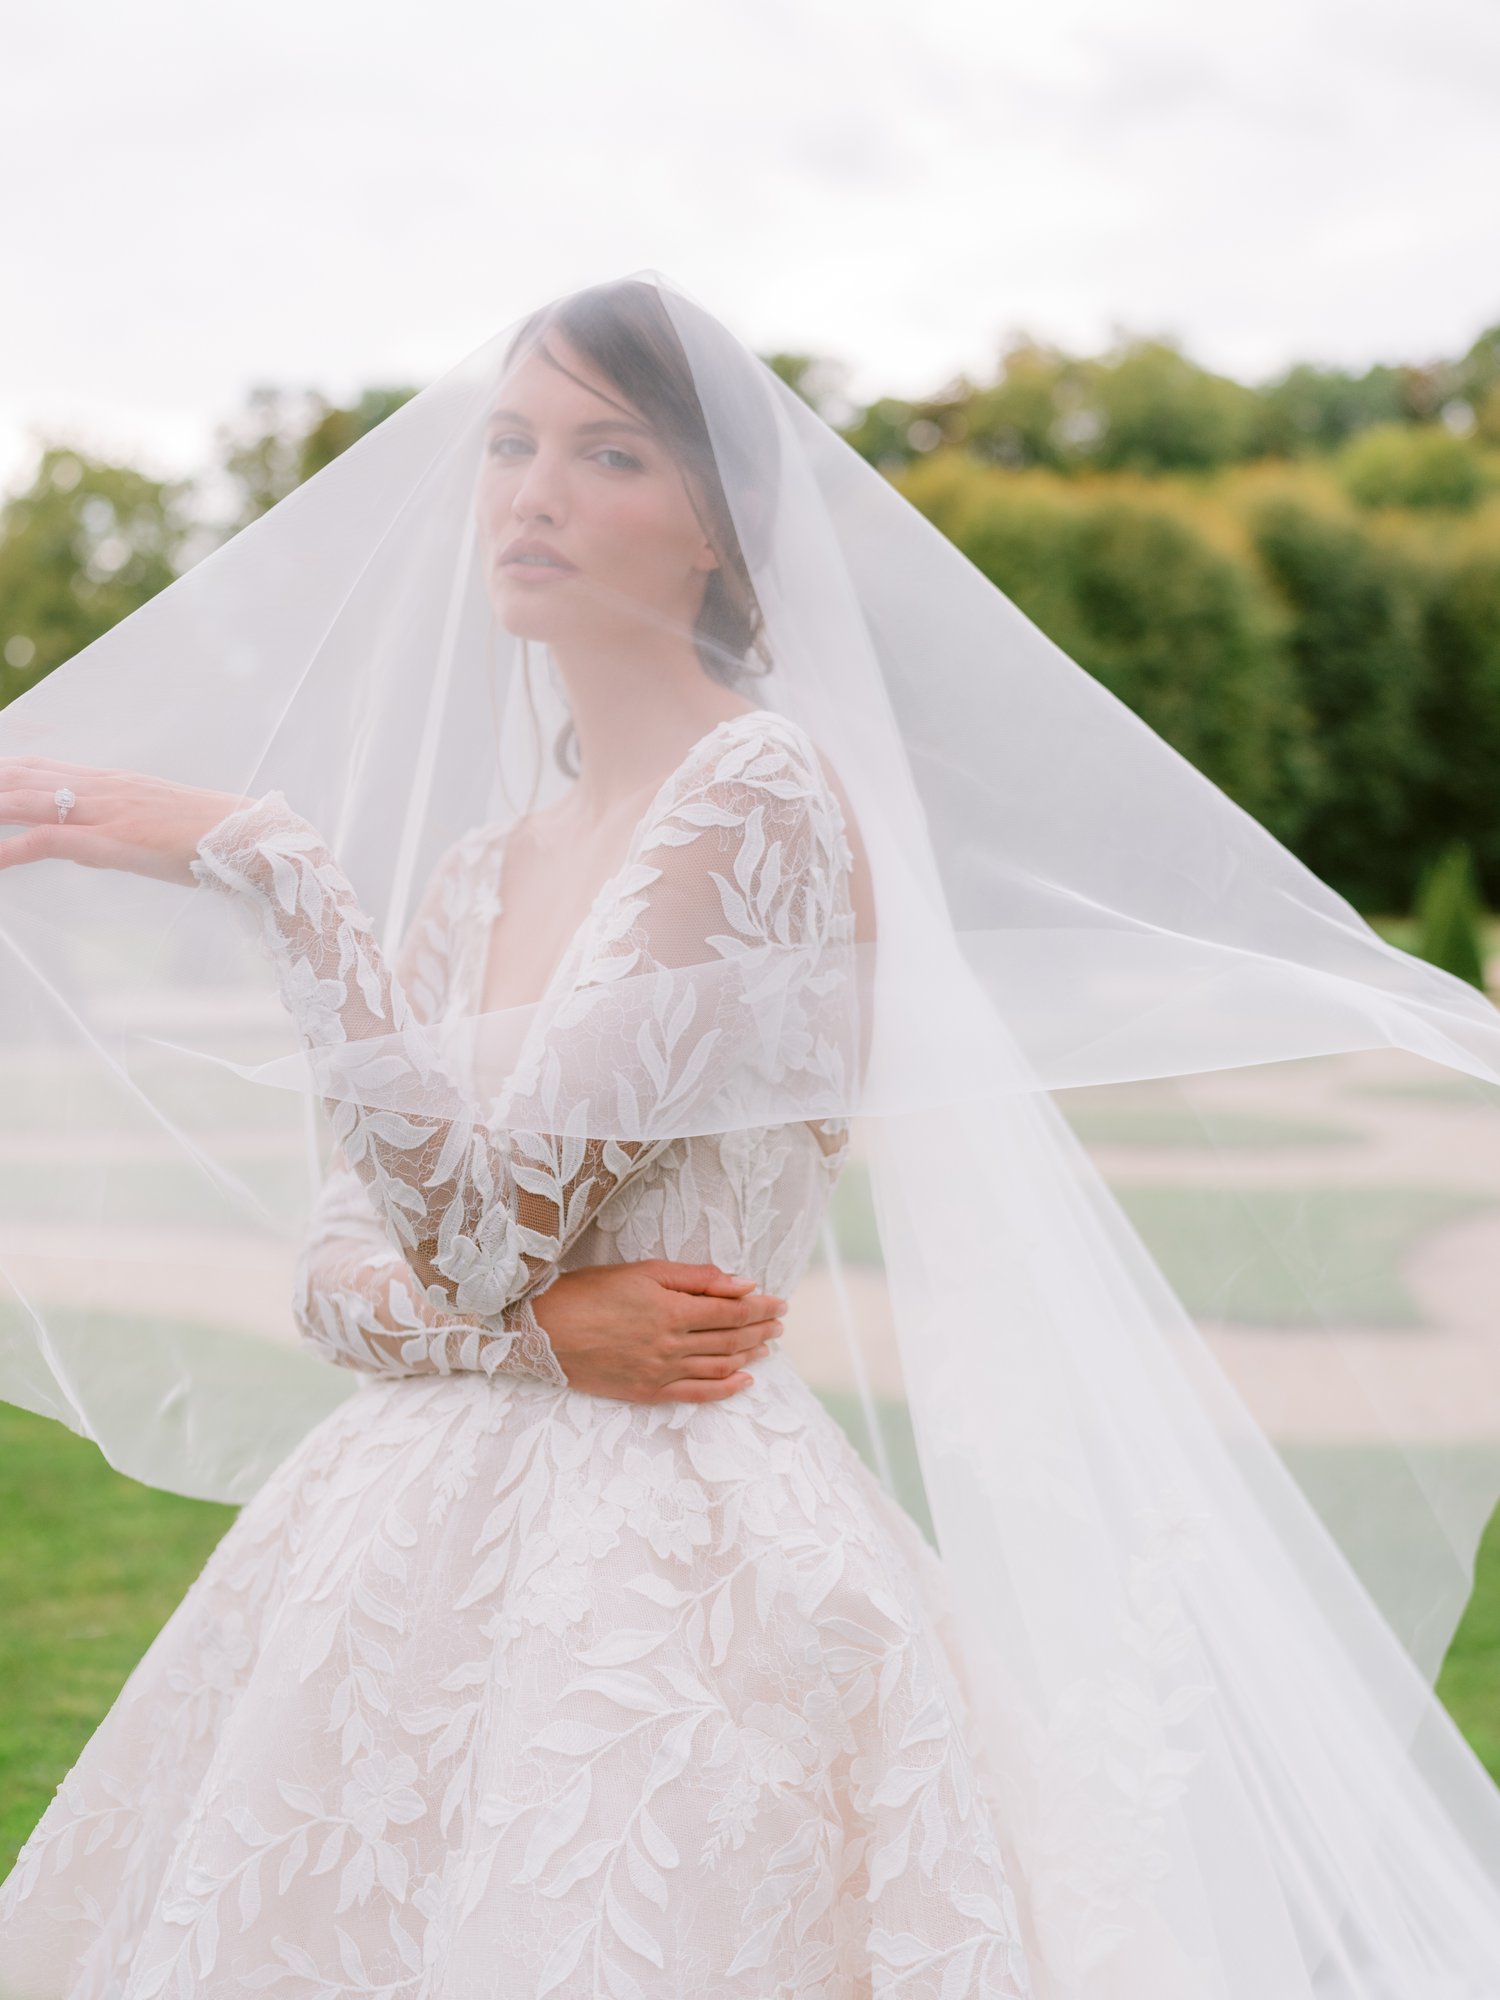 Wedding Accessories — The Ultimate Bride